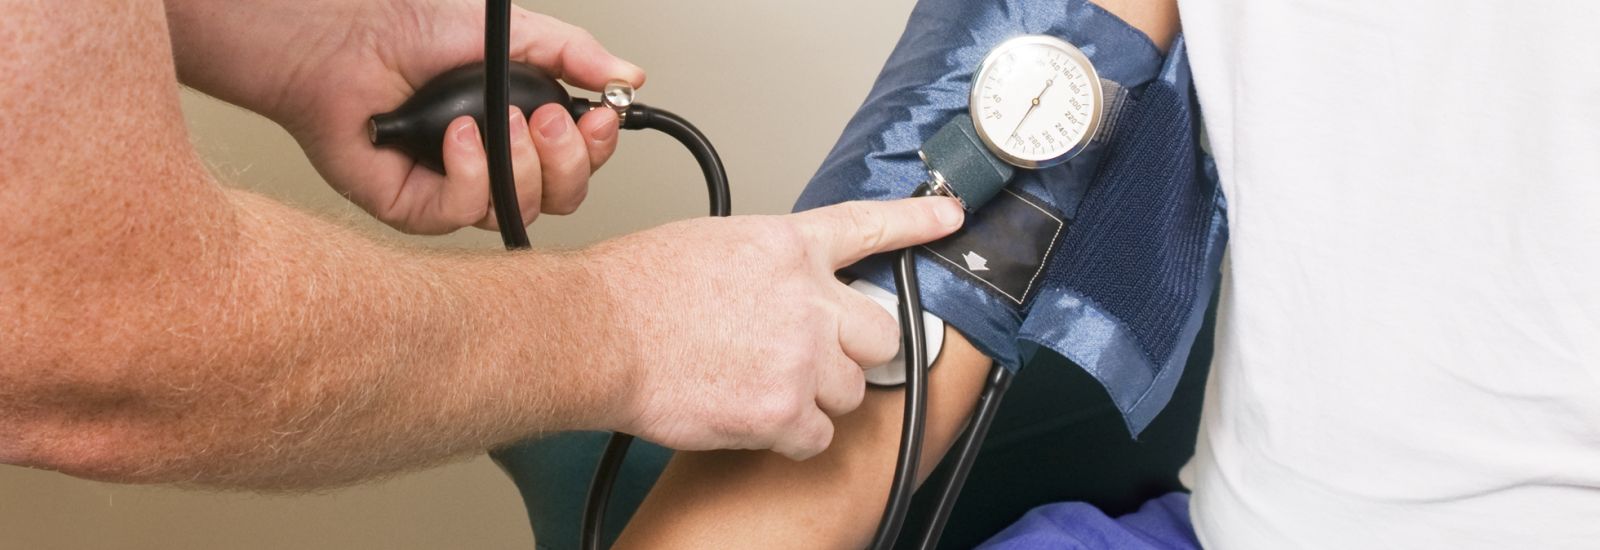 Man getting blood pressure tested by nurse